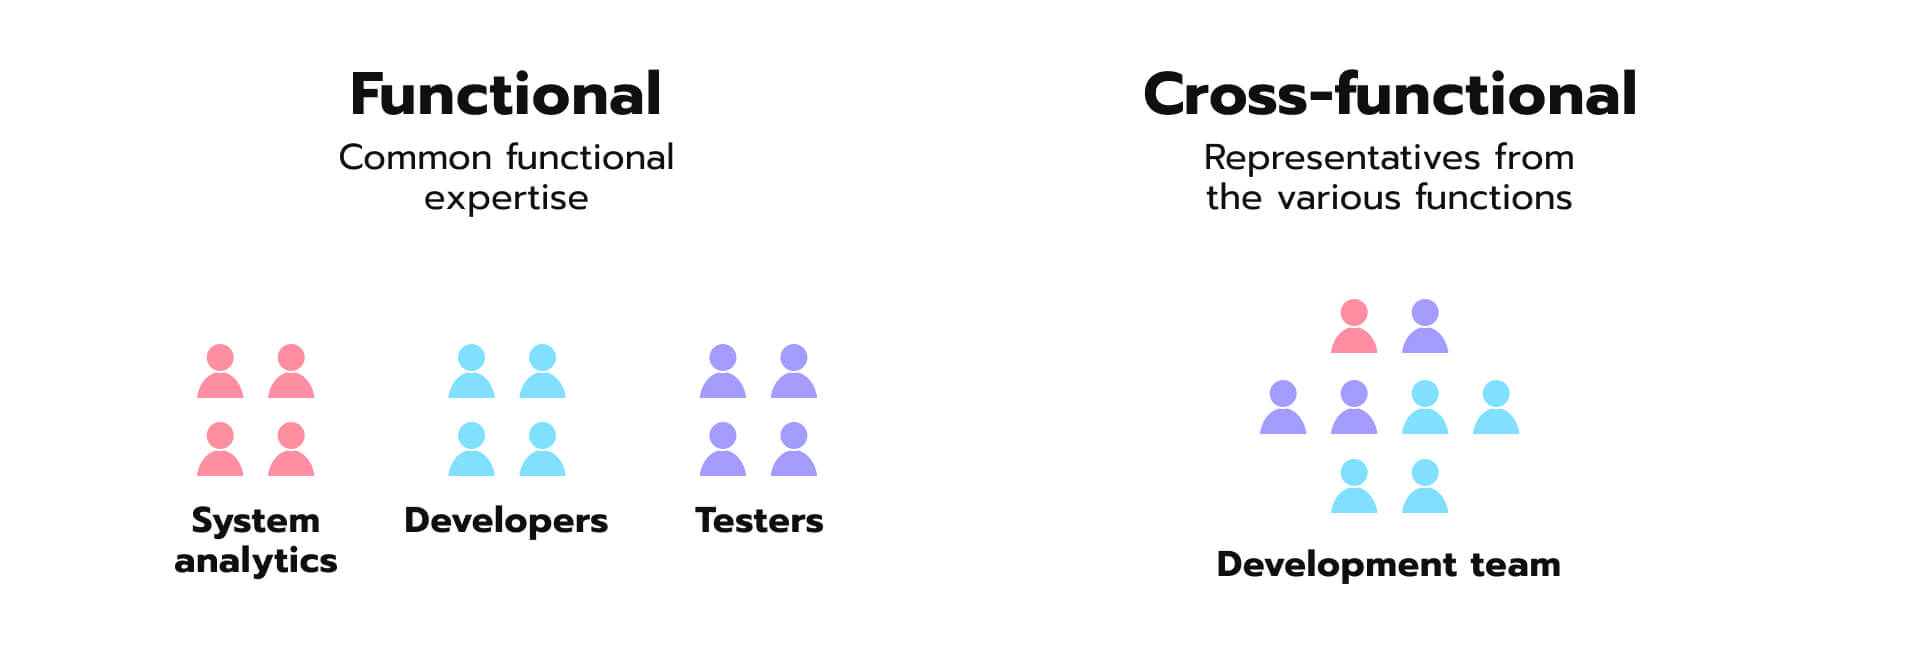 three key roles on their cross-functional team